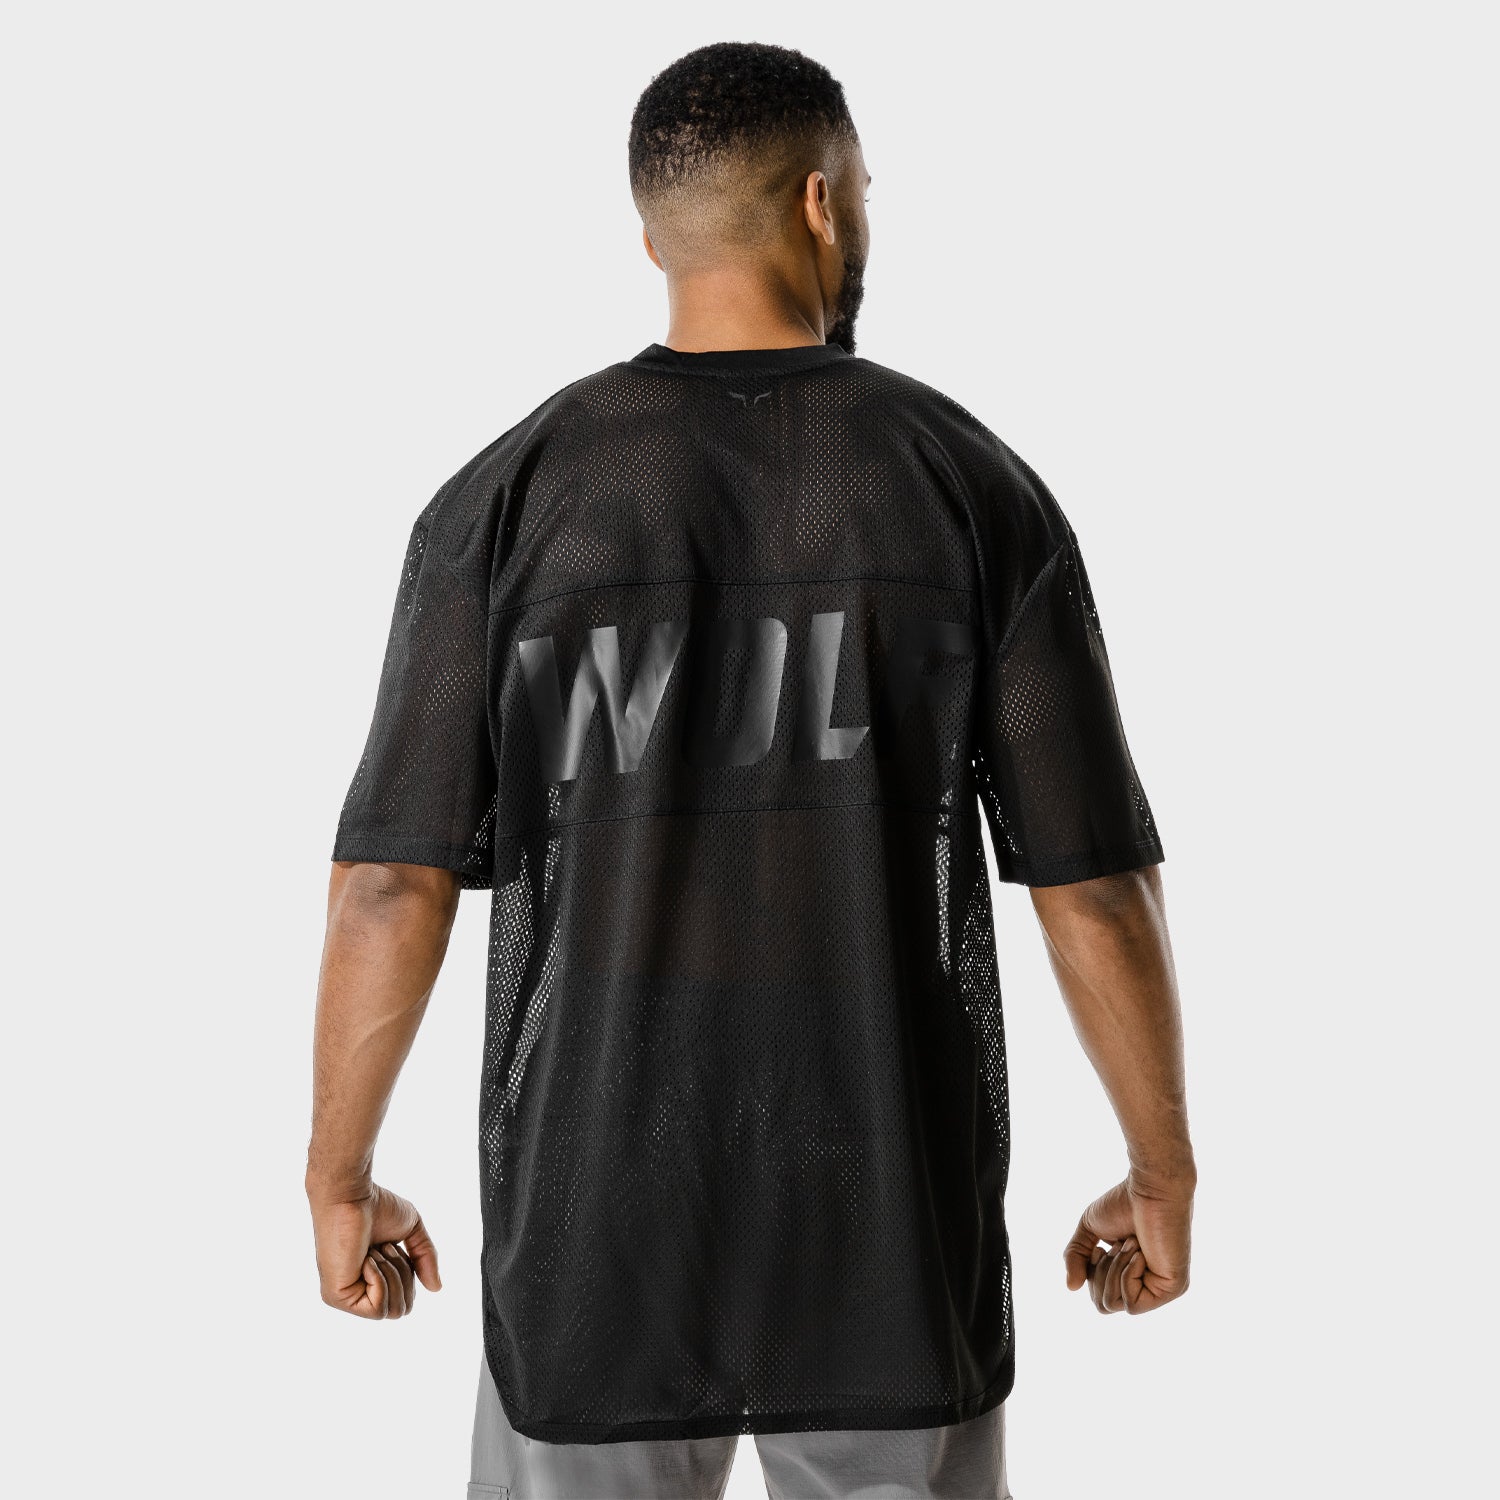 squatwolf-workout-t-shirt-code-oversized-mesh-t-shirt-black-gym-clothes-for-men